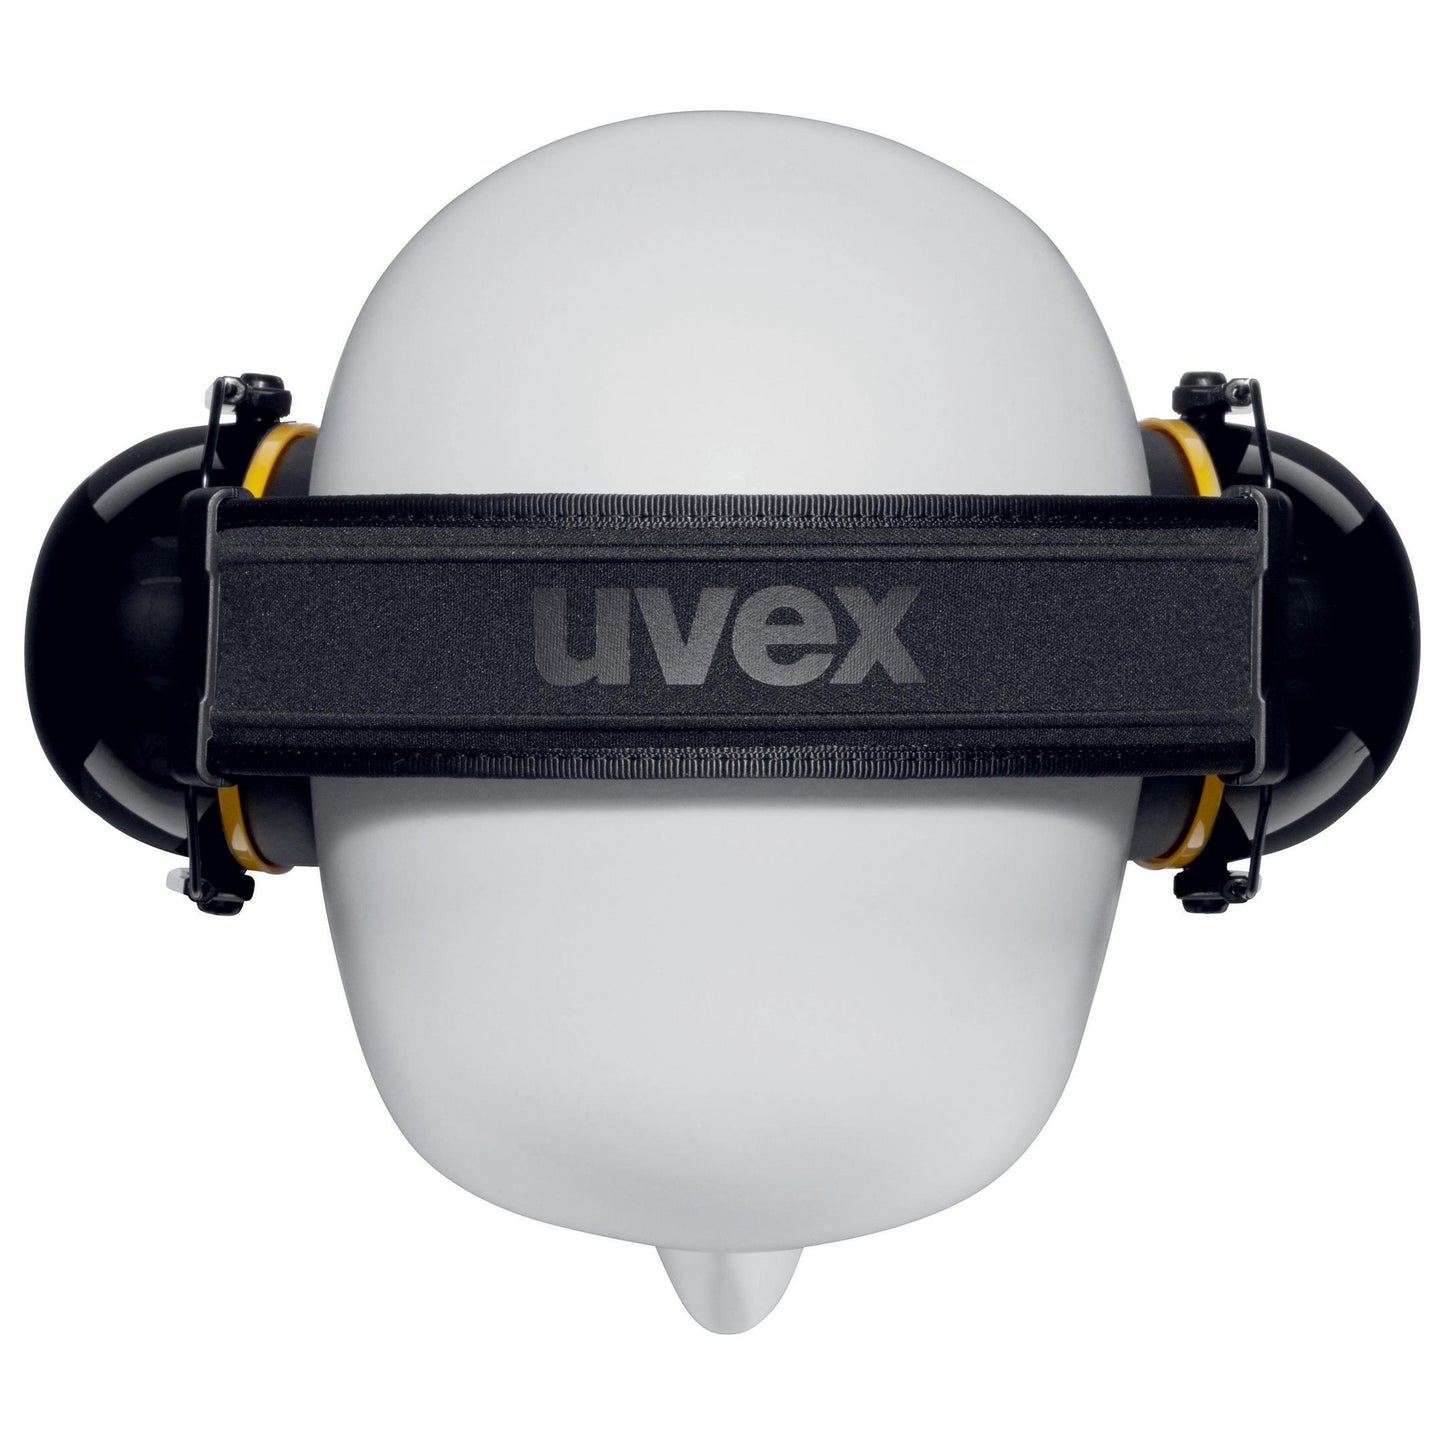 uvex K20 Kapselgehörschutz SNR 33 dB